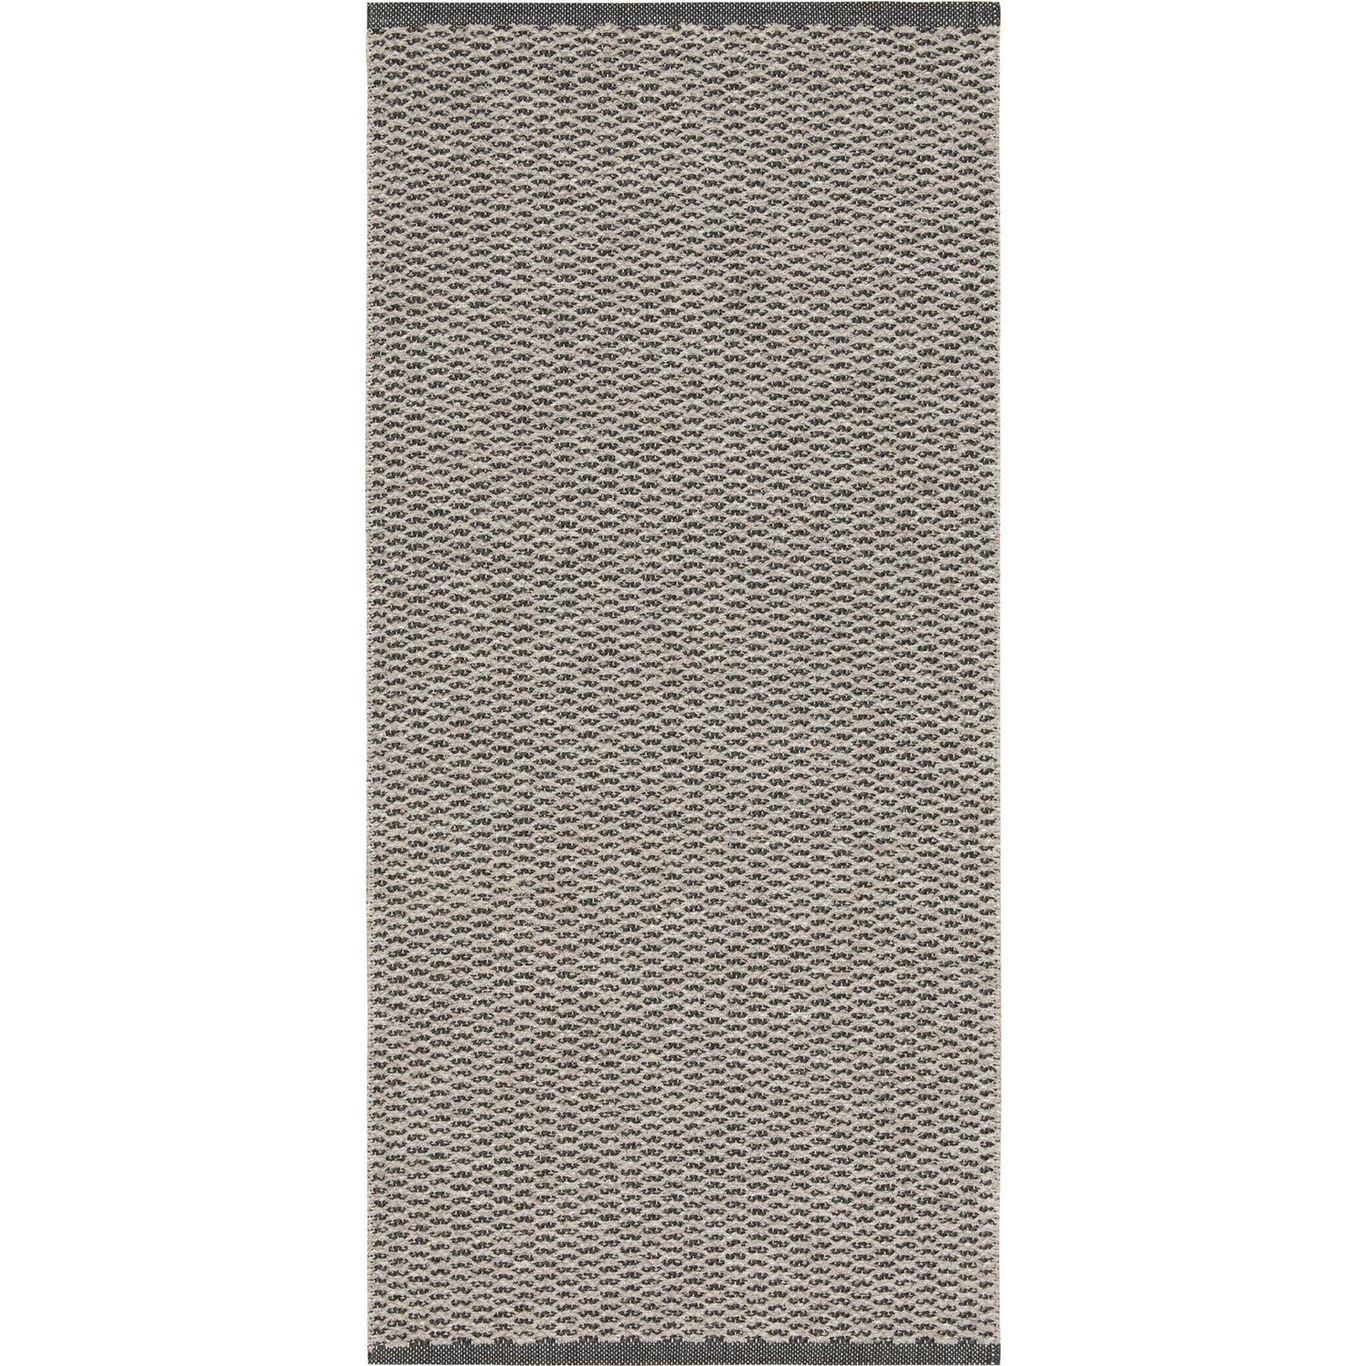 Mixed Signe Rug 200x300 cm, Grey